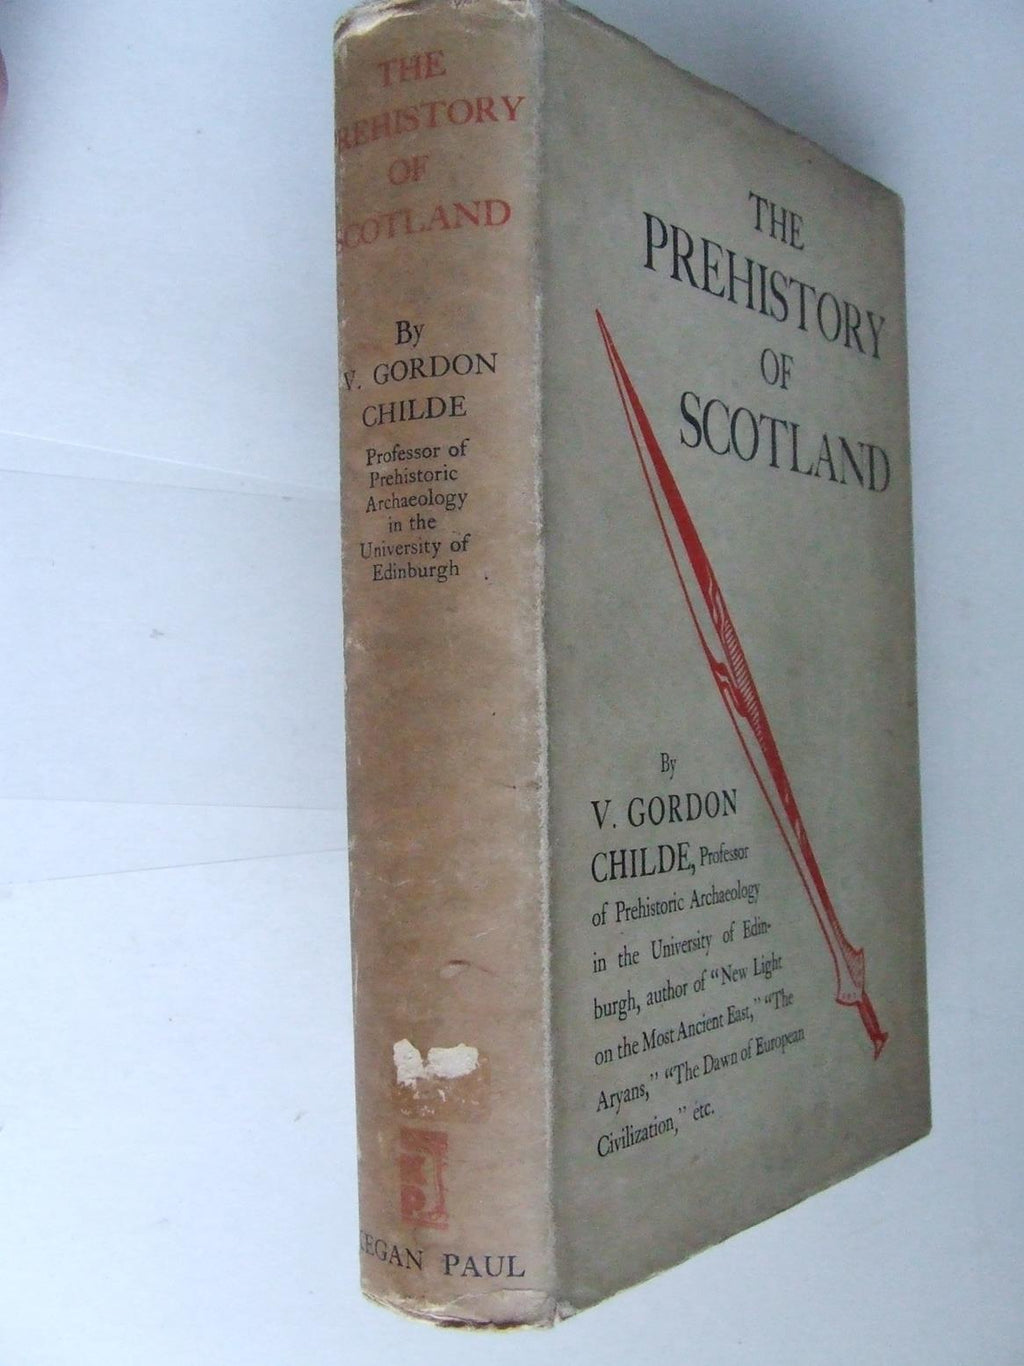 The Prehistory of Scotland